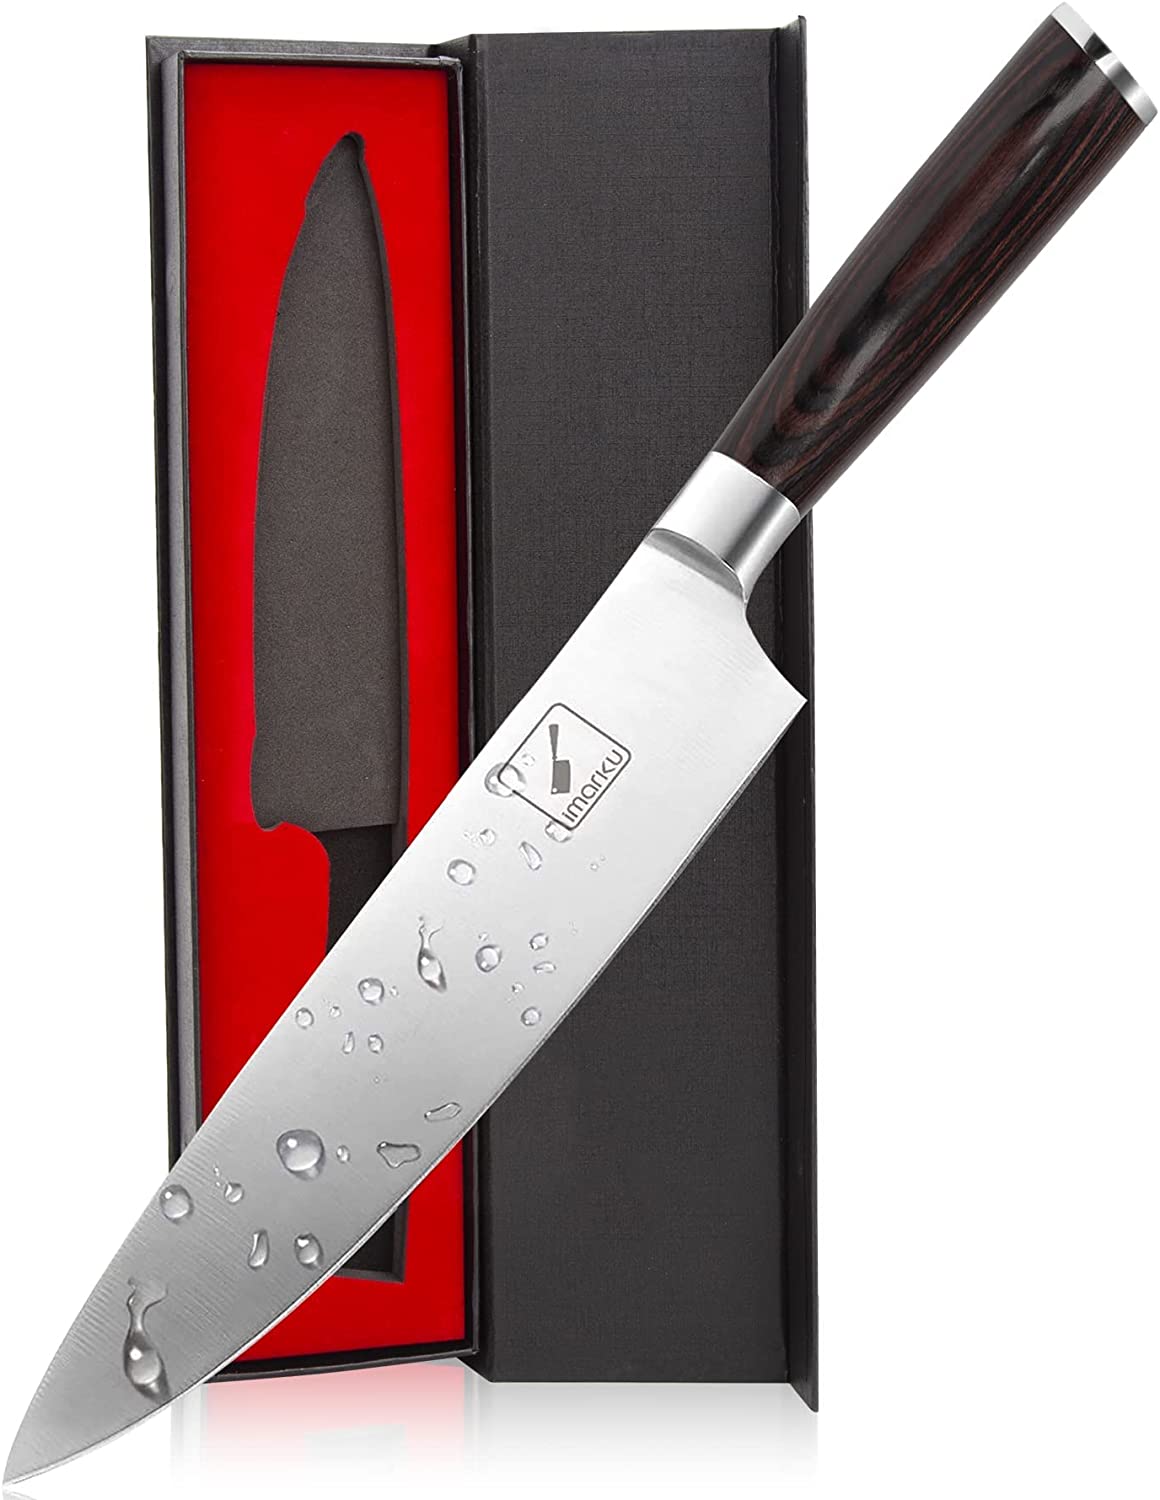 https://www.dontwasteyourmoney.com/wp-content/uploads/2019/04/imarku-pro-kitchen-8-in-chefs-knife.jpg